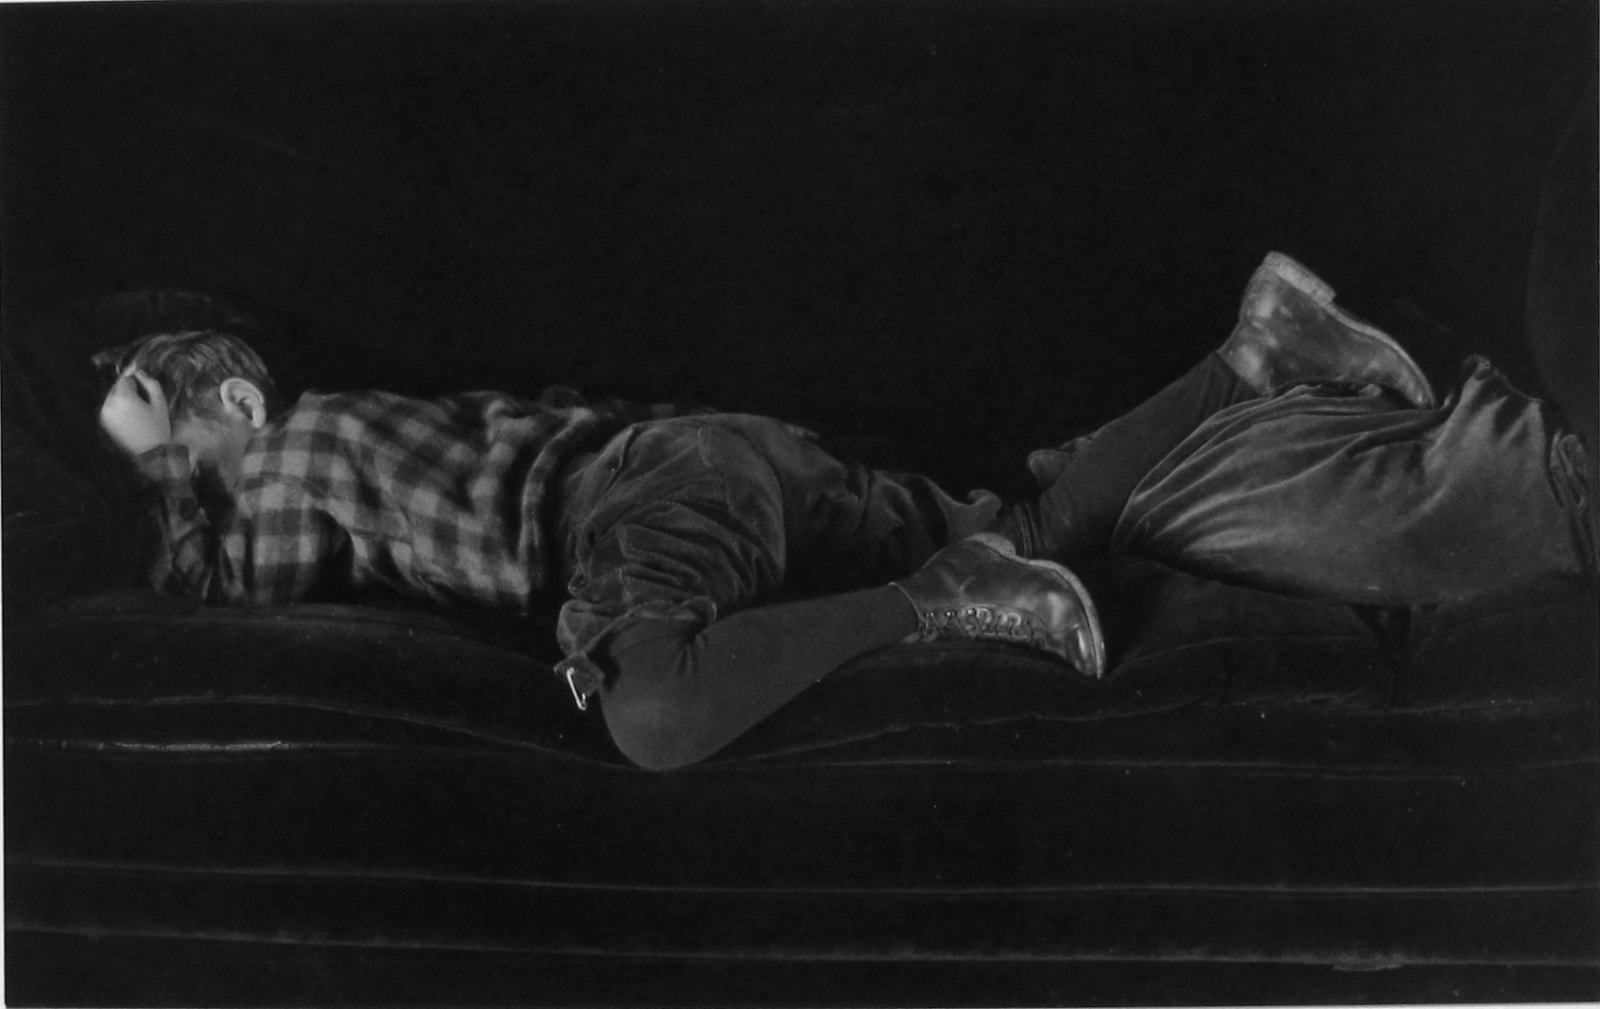 Edward Weston, Neil, 1925